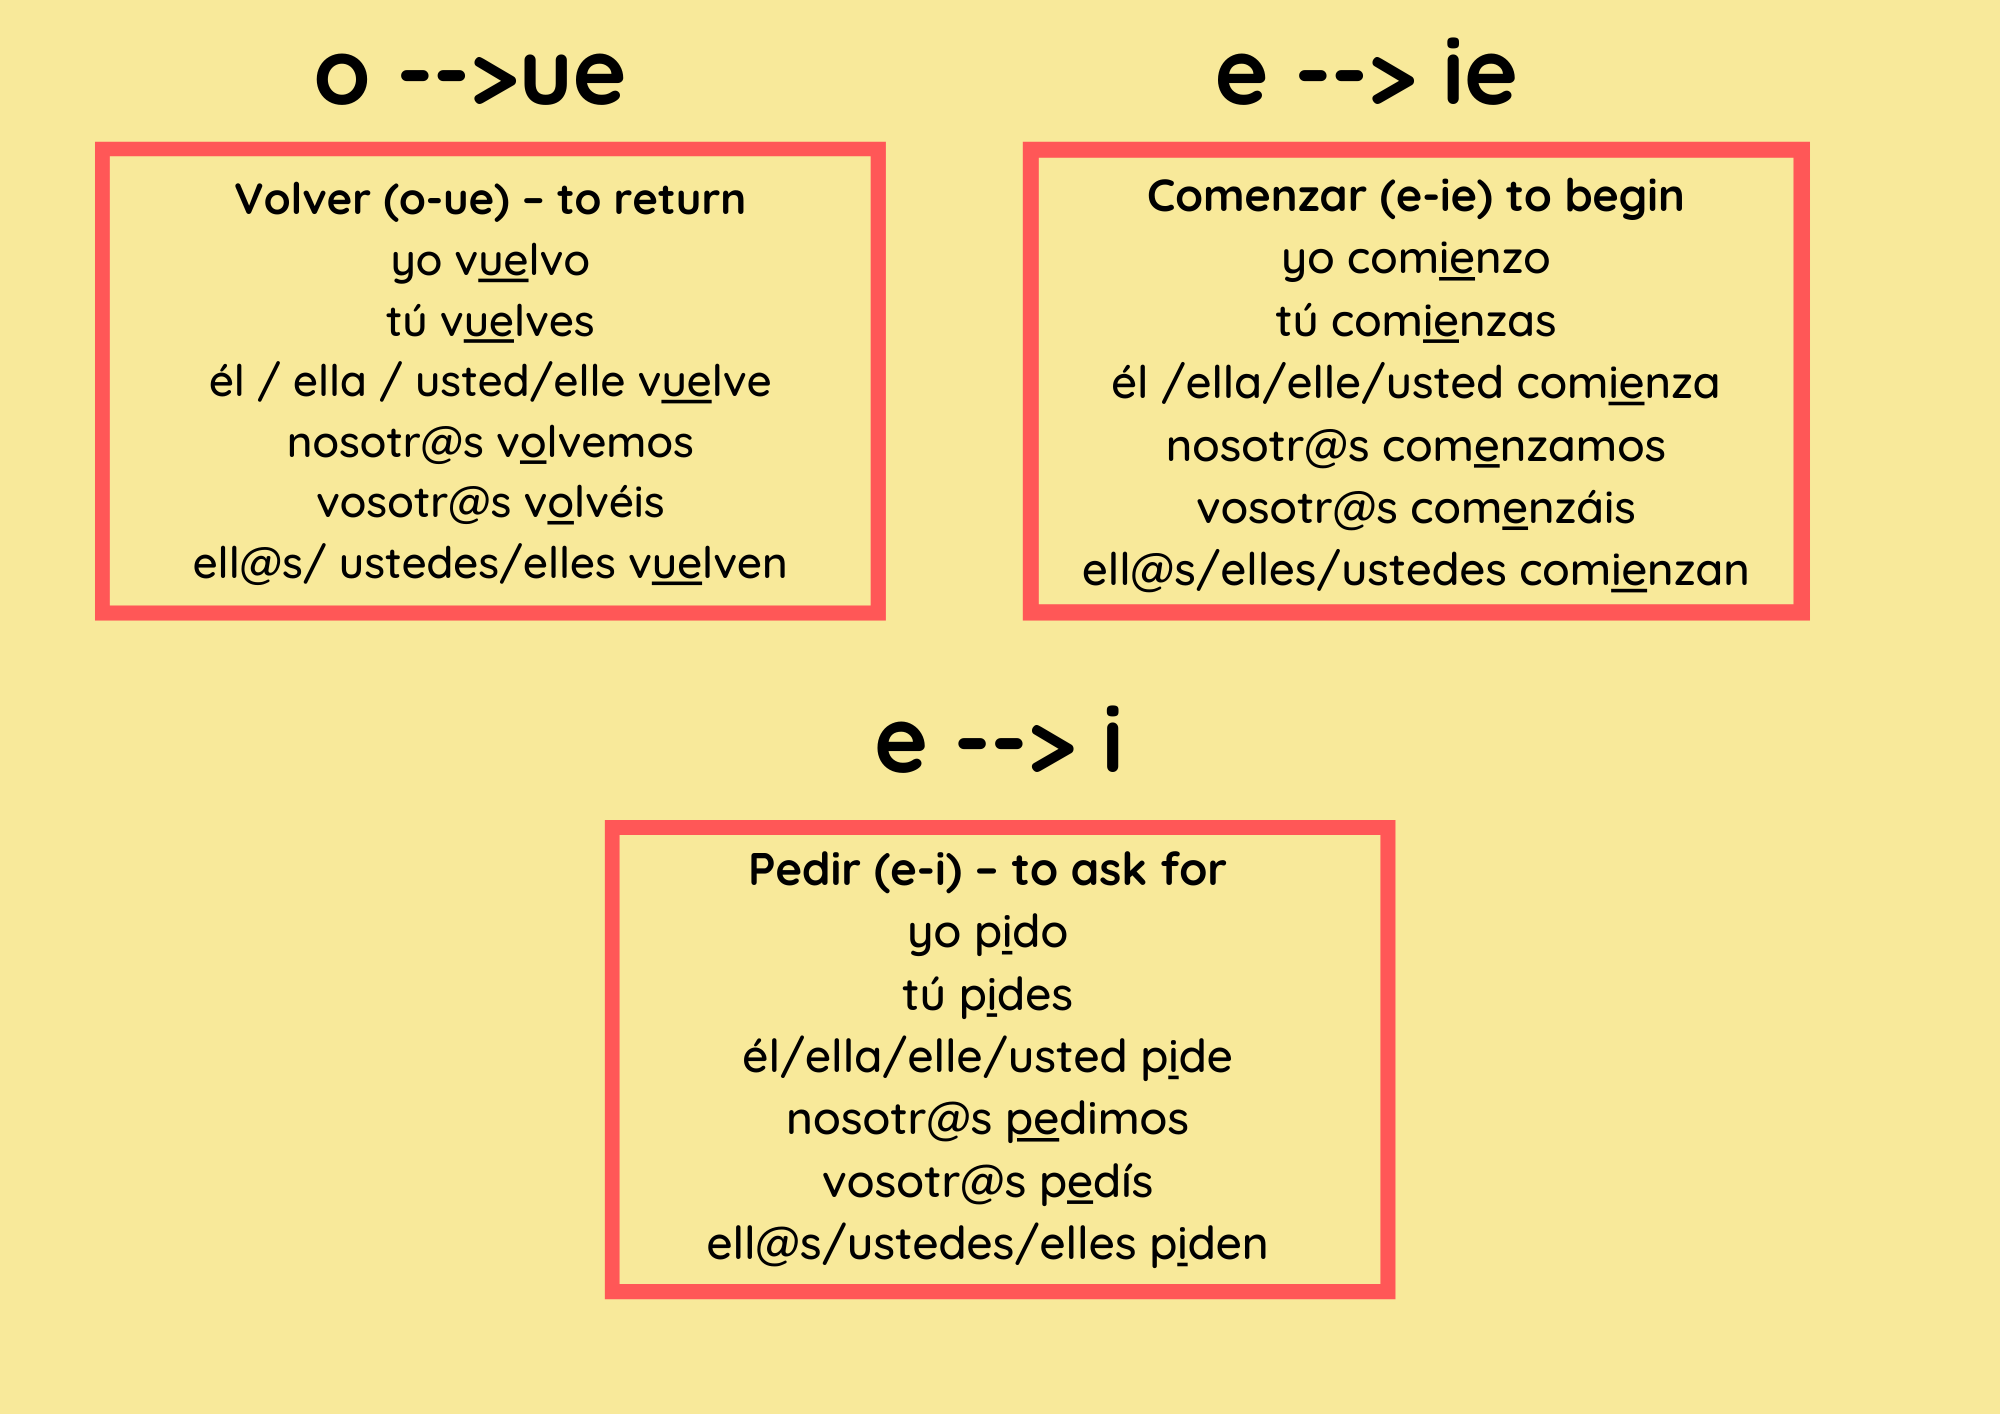 Table showing o to ue; e to ie; and e to i verb conjugation in present tense